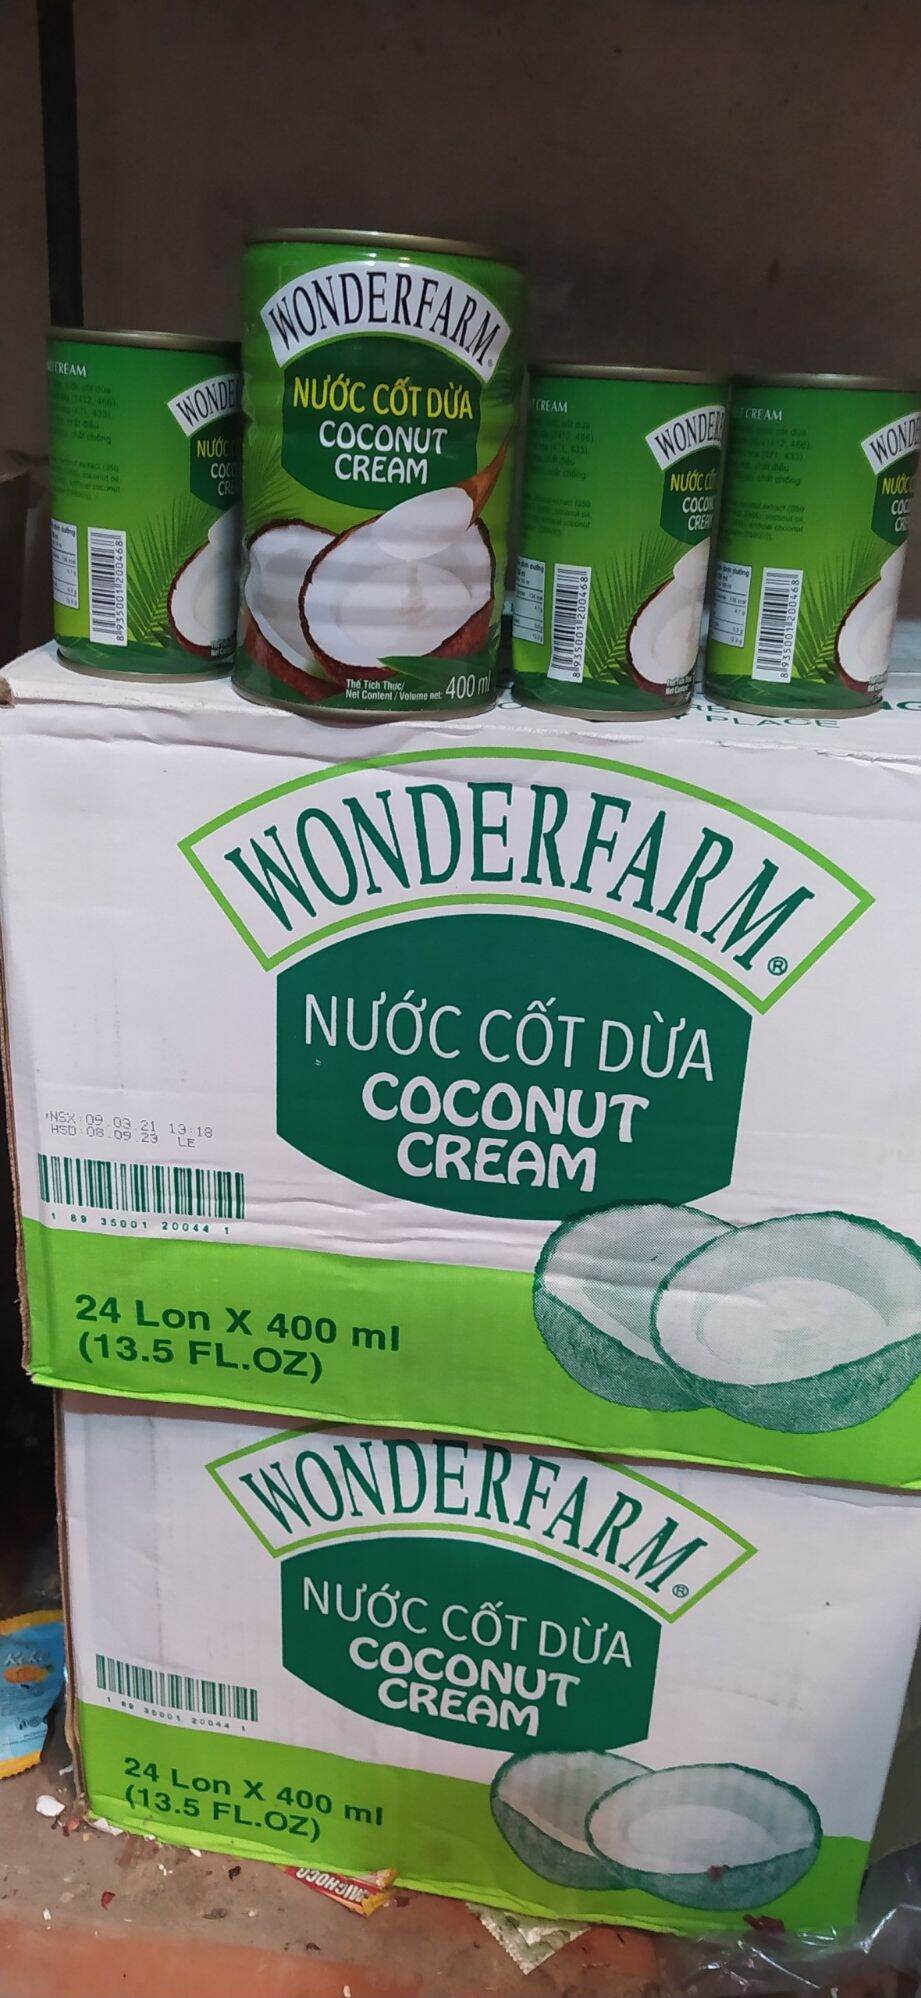 Nước Cốt Dừa Coconut acream Wonderfarm loại 160ml